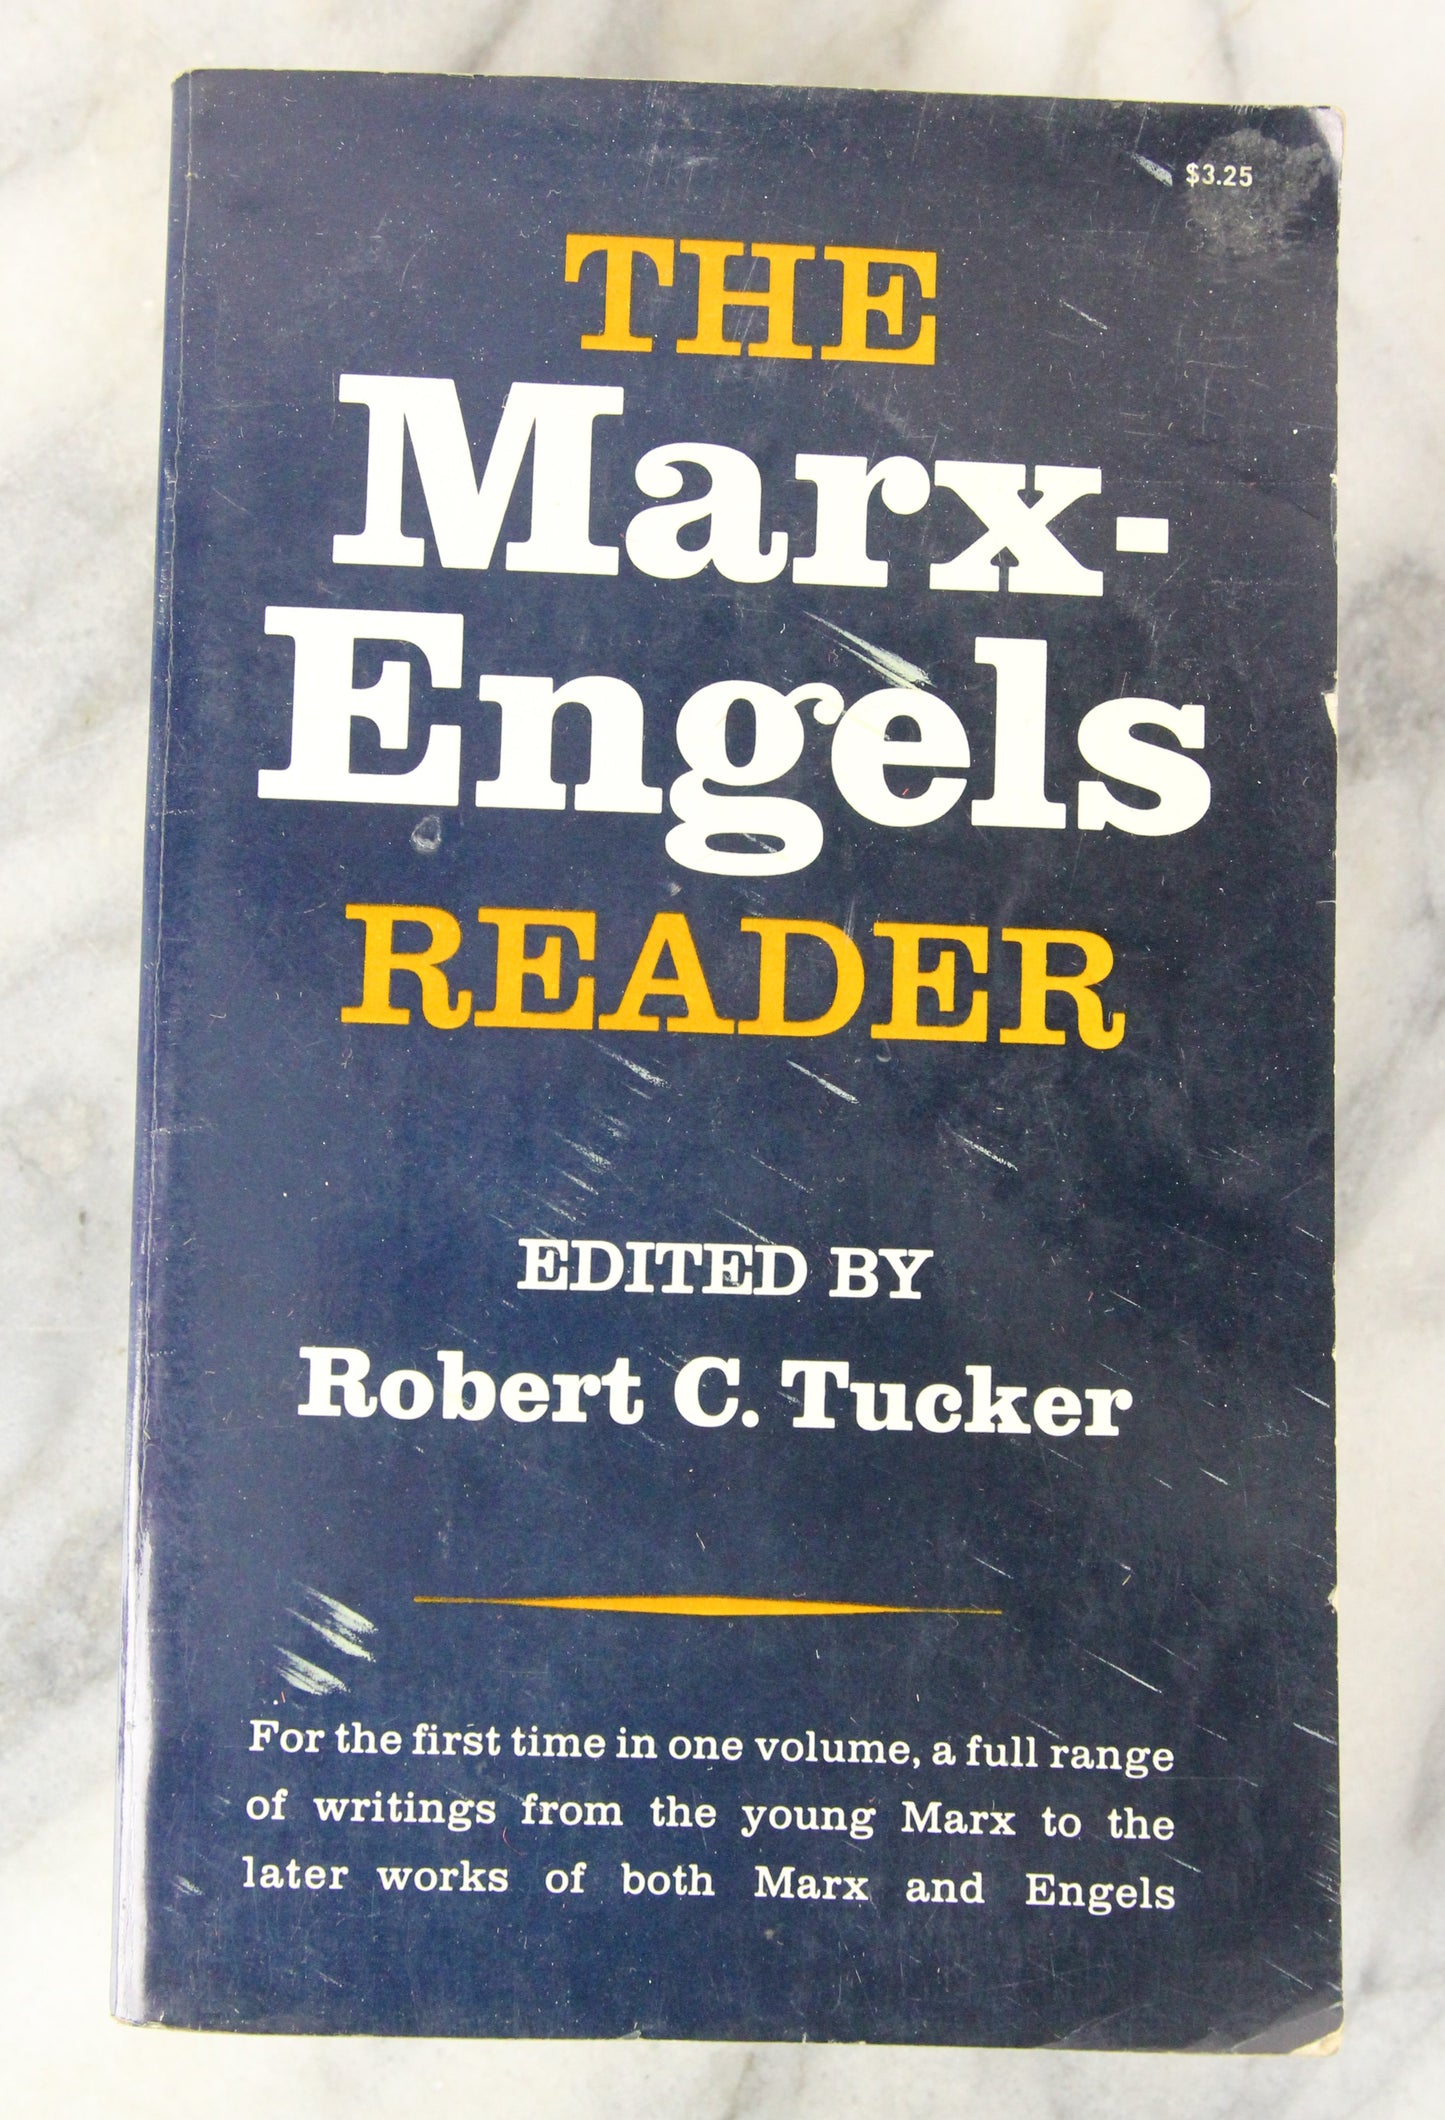 The Marx-Engels Reader, Edited by Robert C. Tucker, Copyright 1972